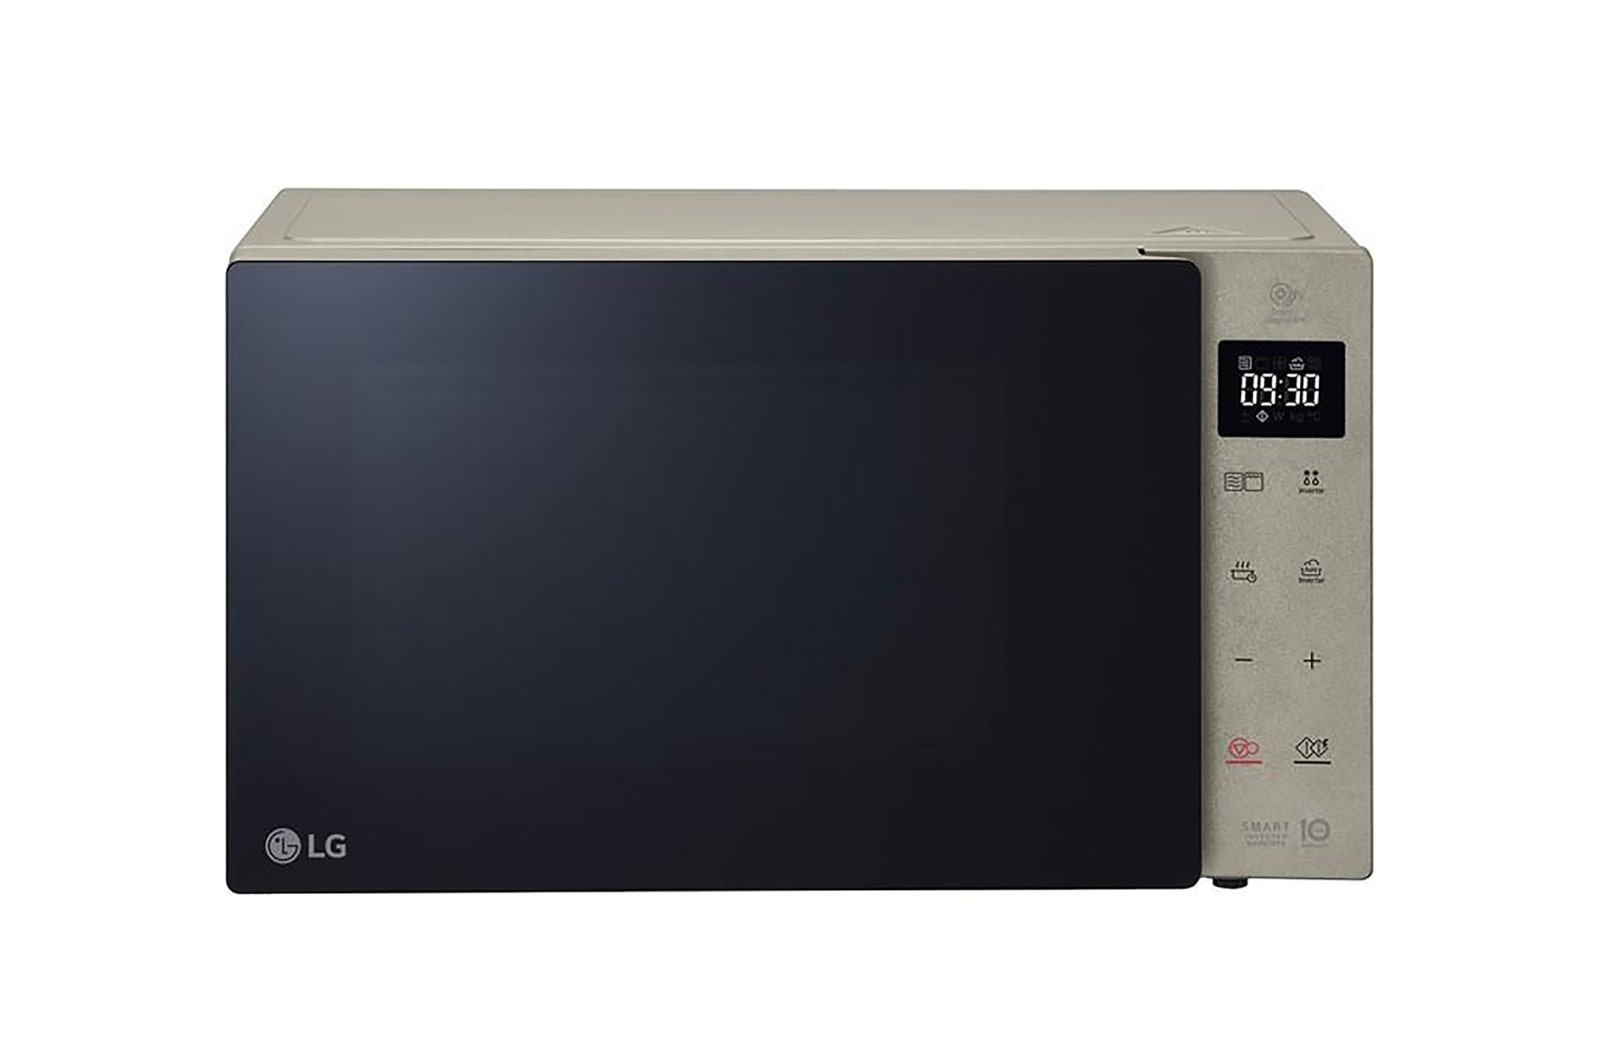 LG Mikrowelle mit Smart Inverter Technologie | Quarzgrill-Technologie | 25 Liter Kapazität | Tür aus echtem Glas, MH6535NBS